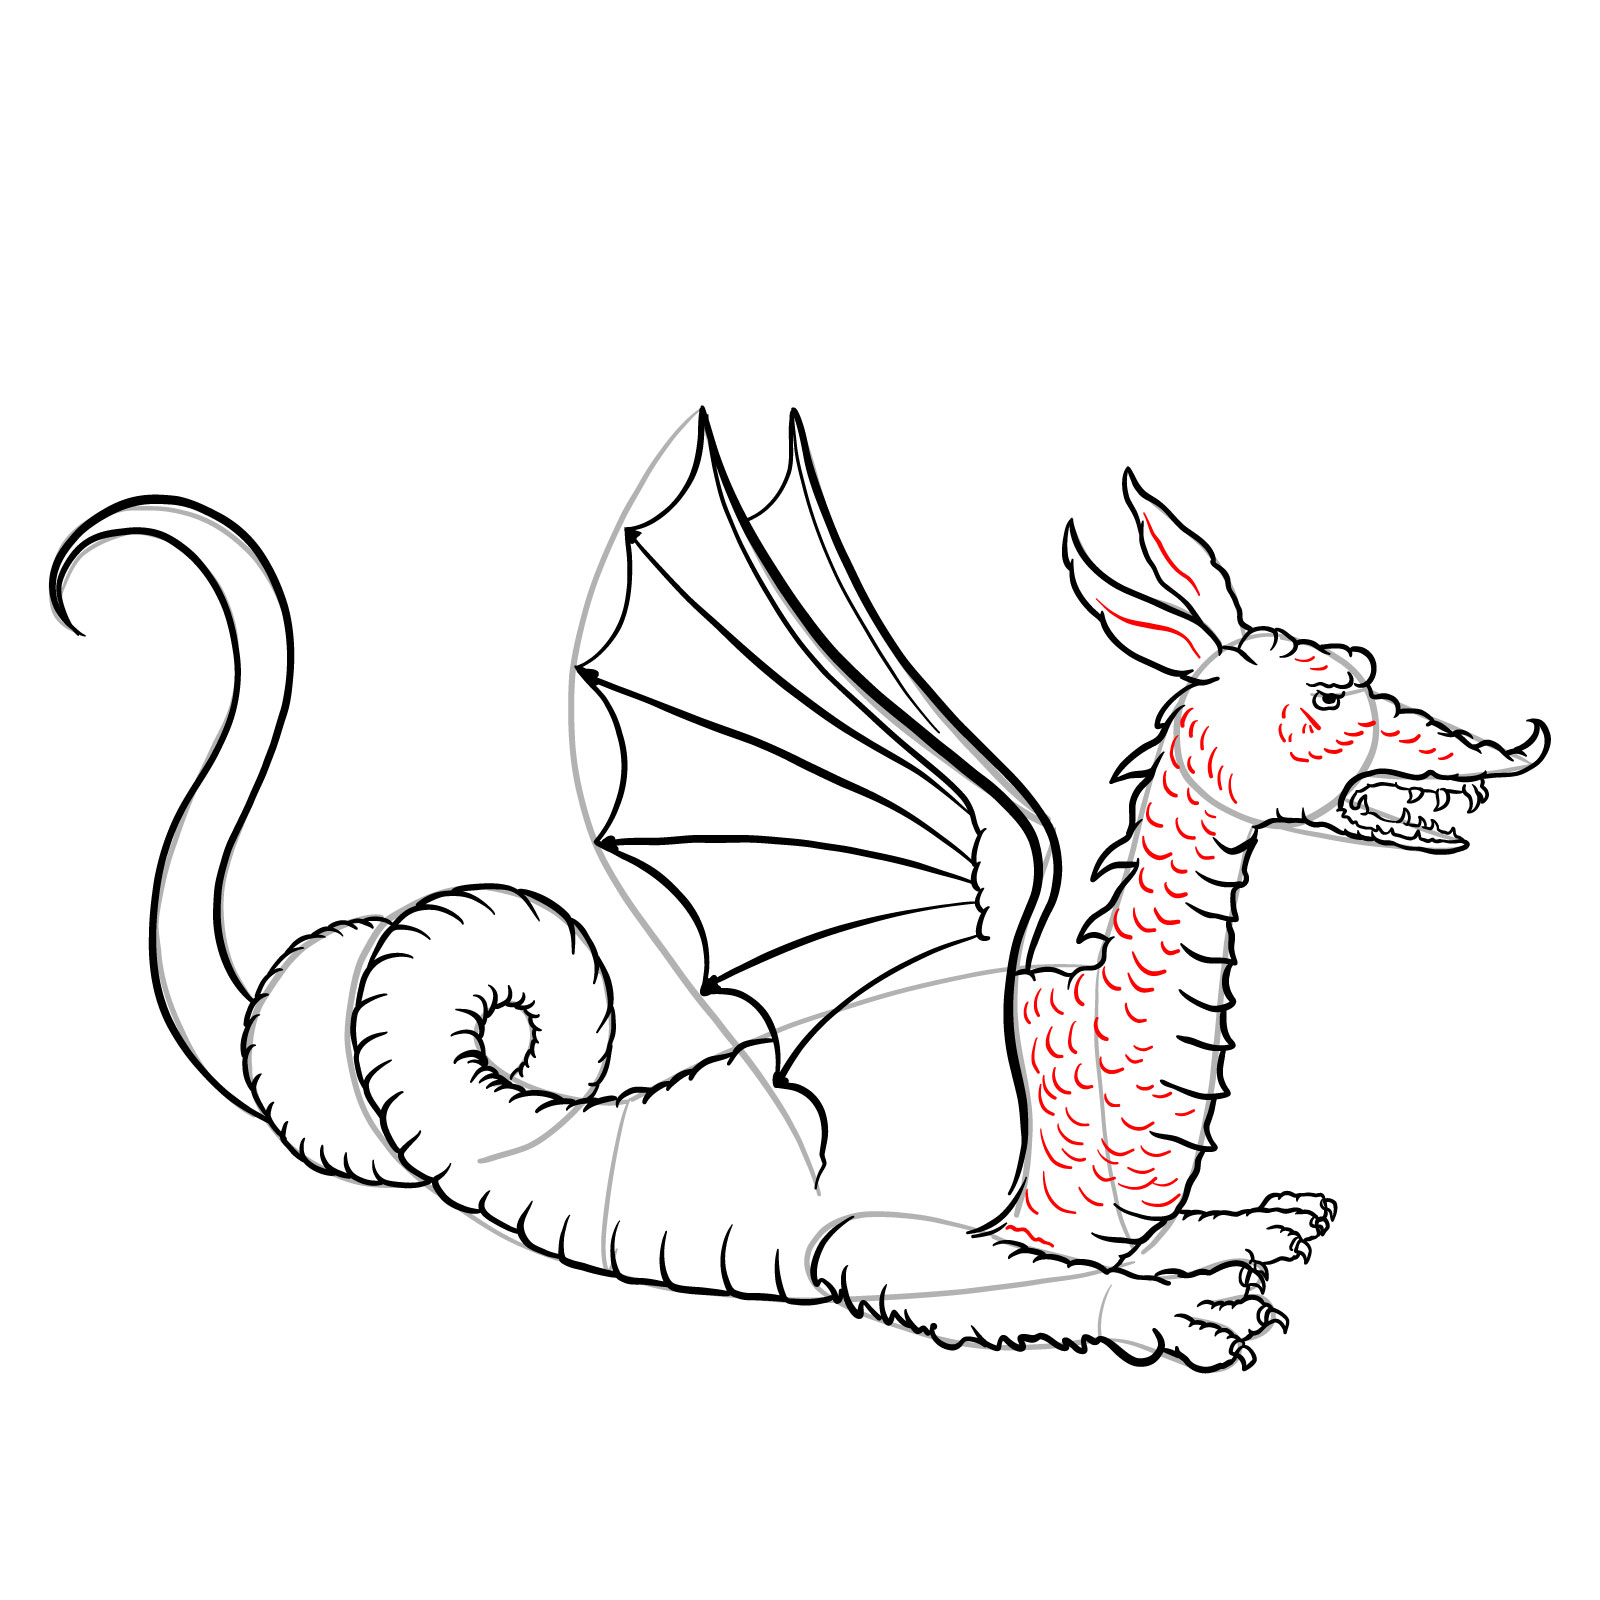 How to draw a Knucker dragon - step 30